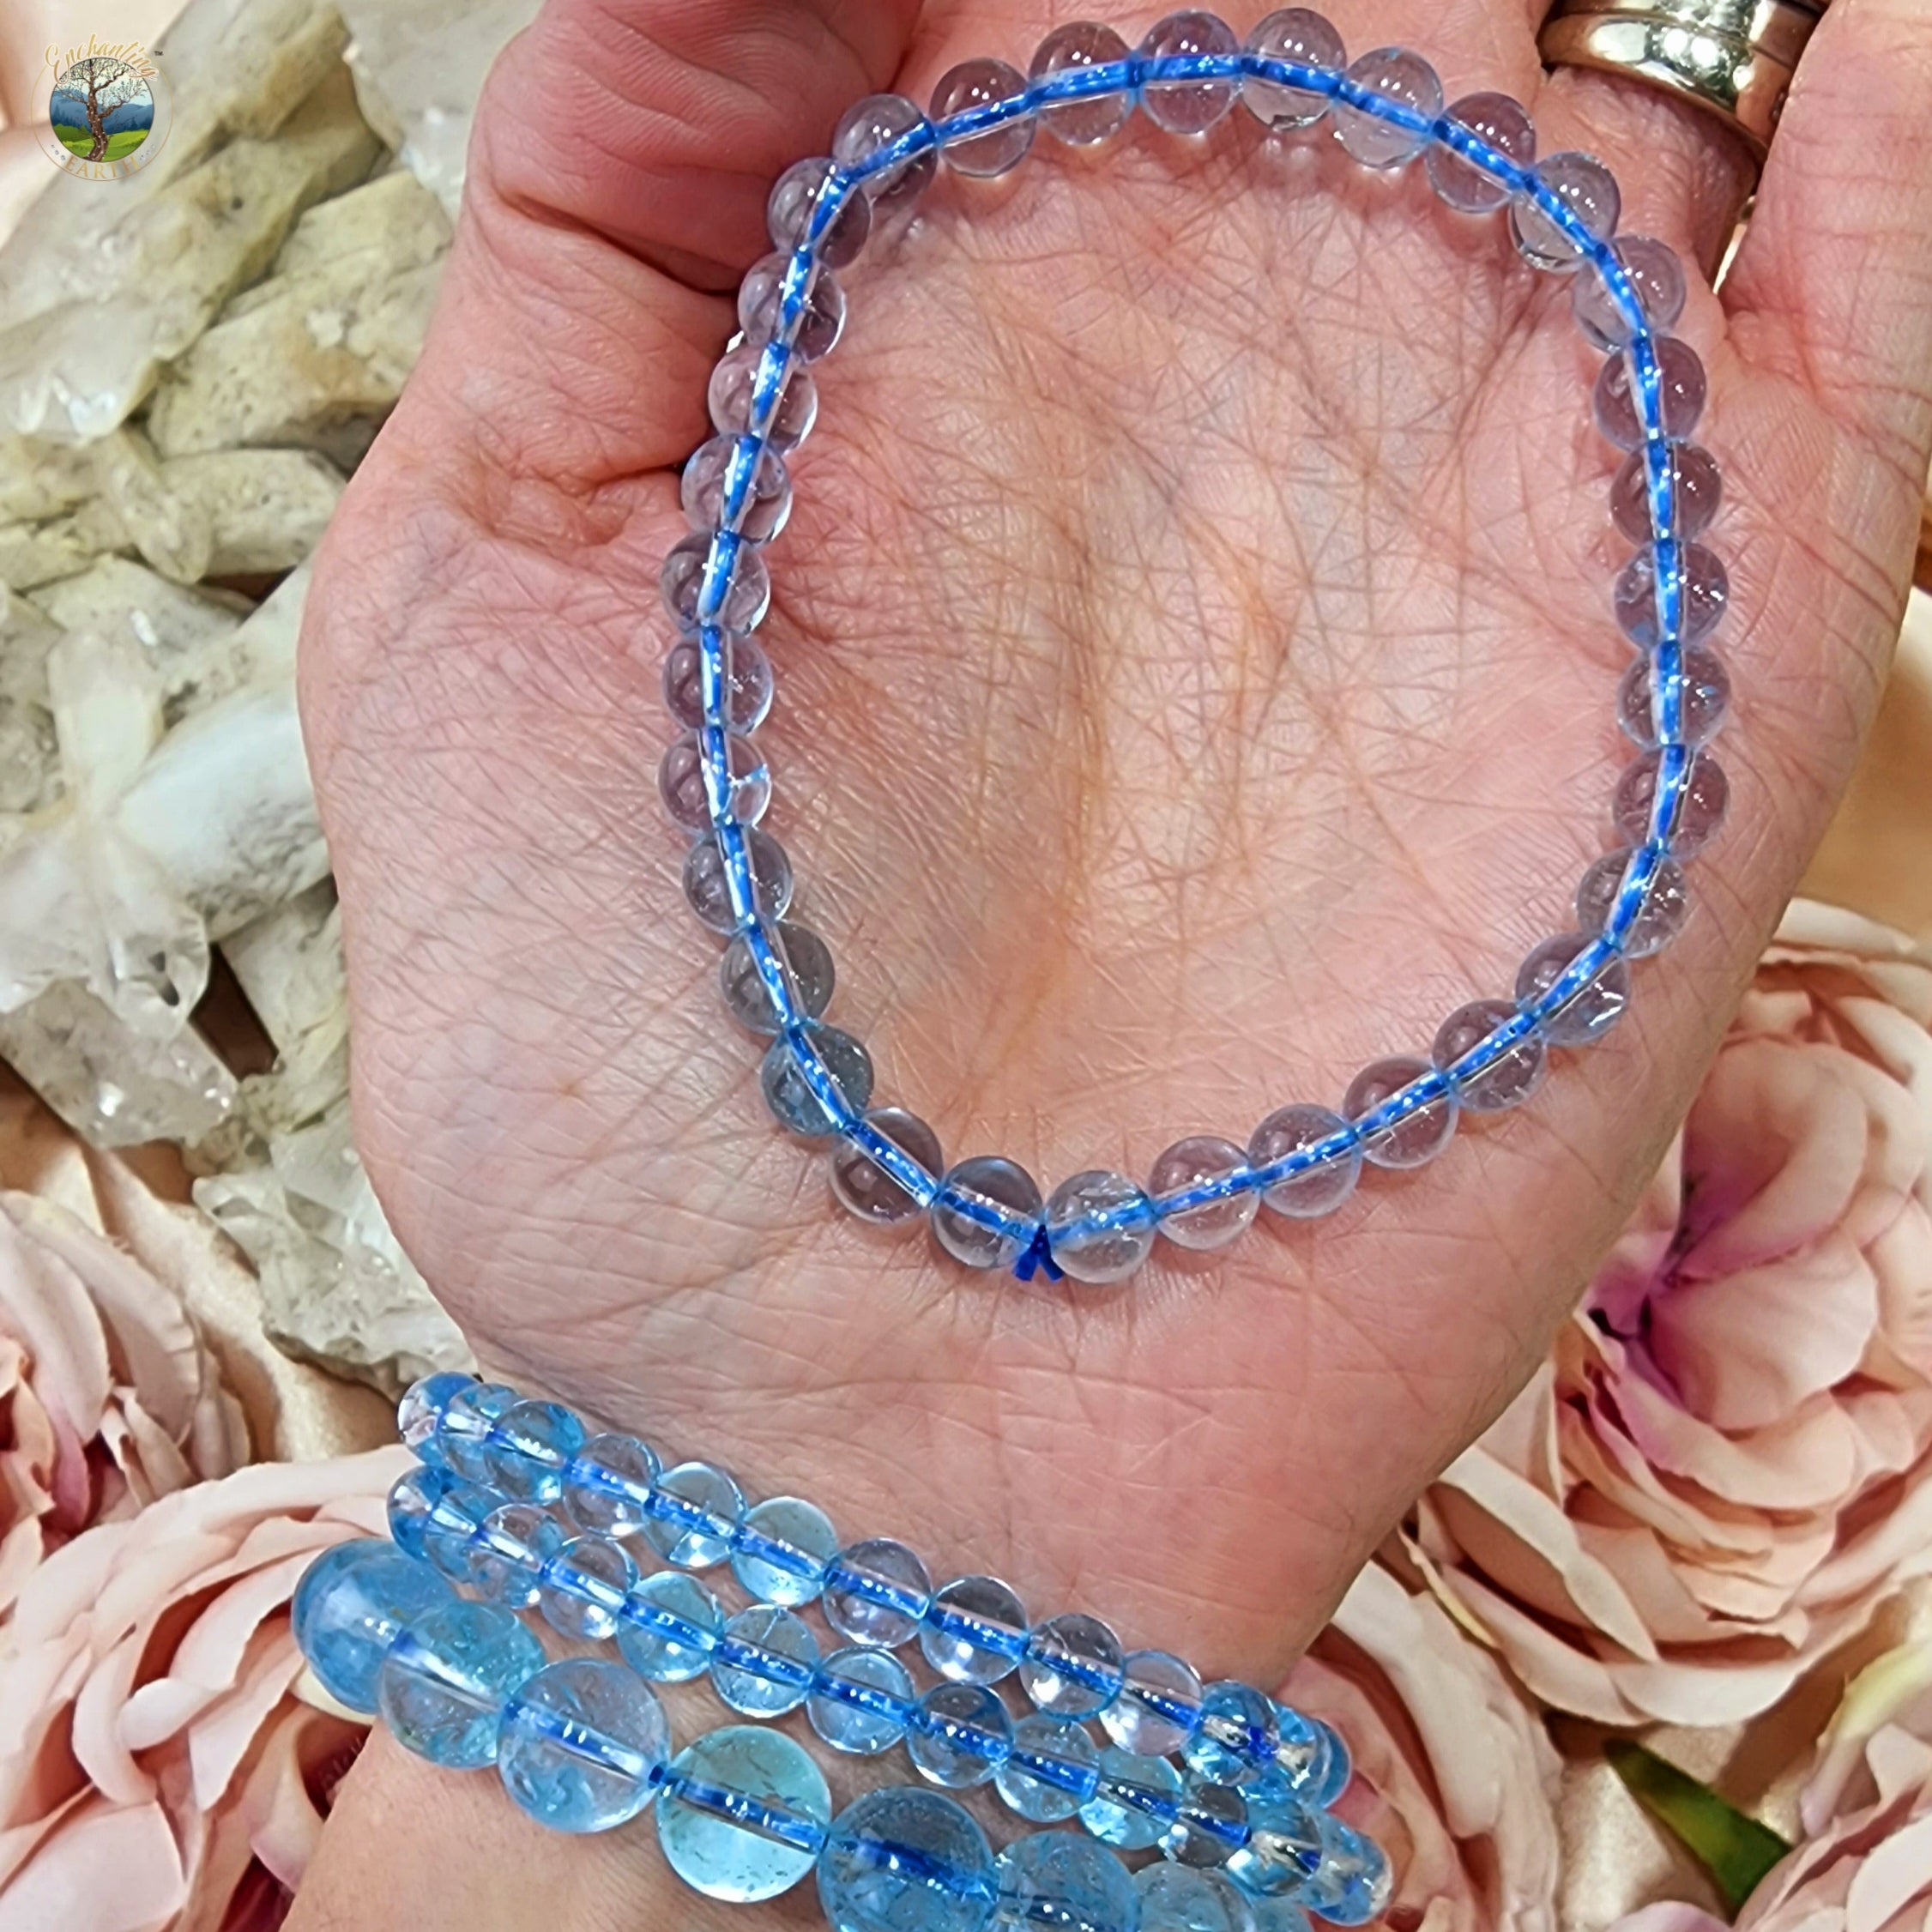 Blue Topaz Bracelet (AAA Grade) for Communication, Focus and Wisdom